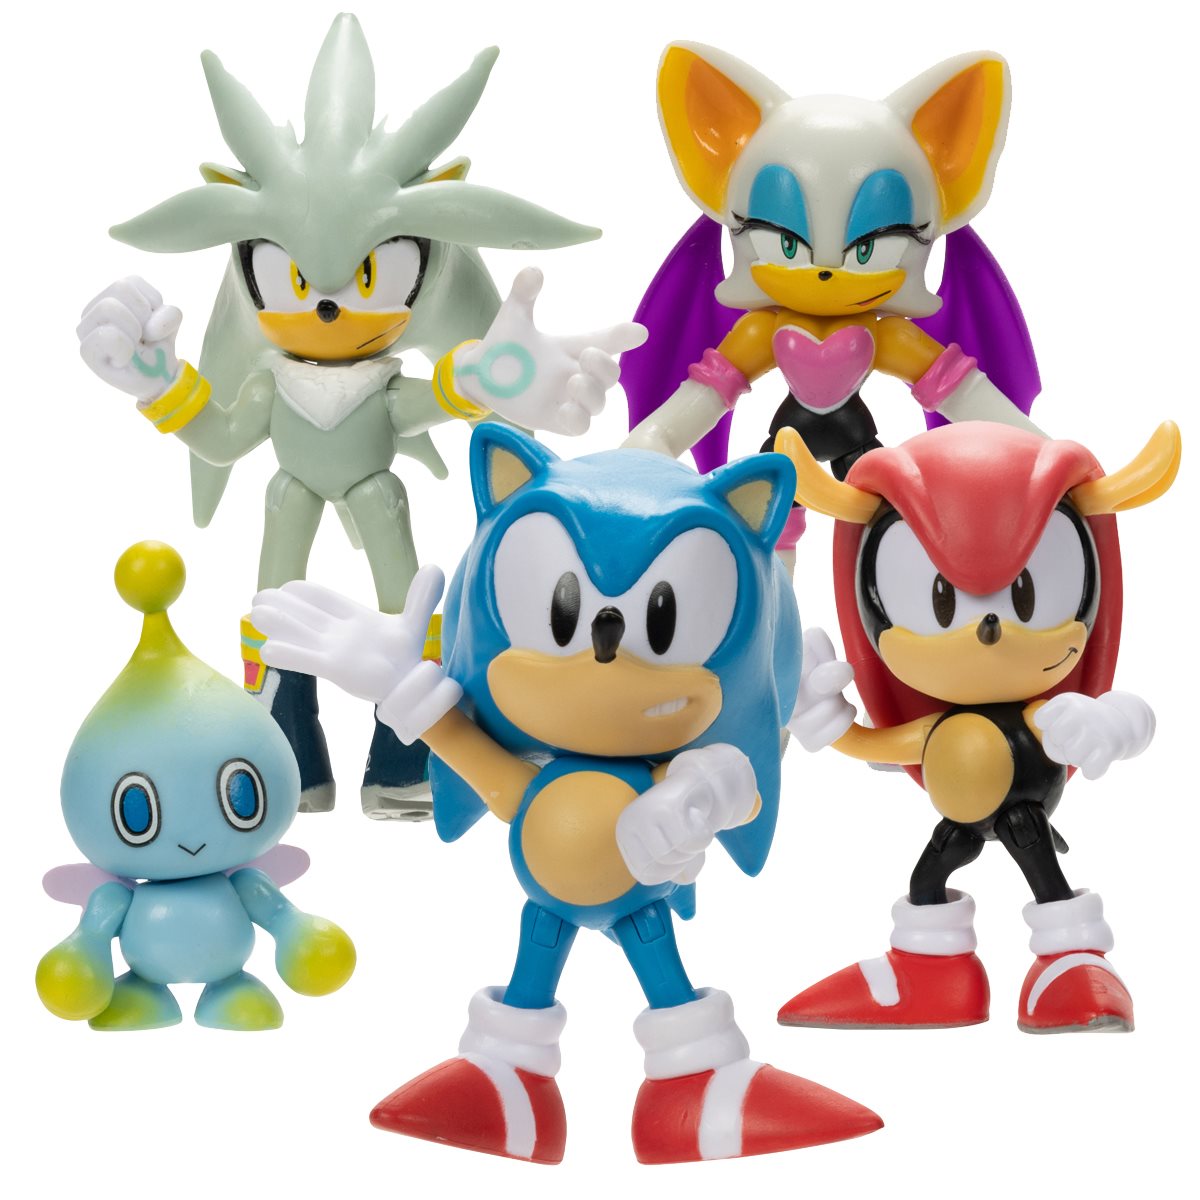 Sonic the Hedgehog Classic MIGHTY the ARMADILLO 2.5 Inch Figure Jakks 2022